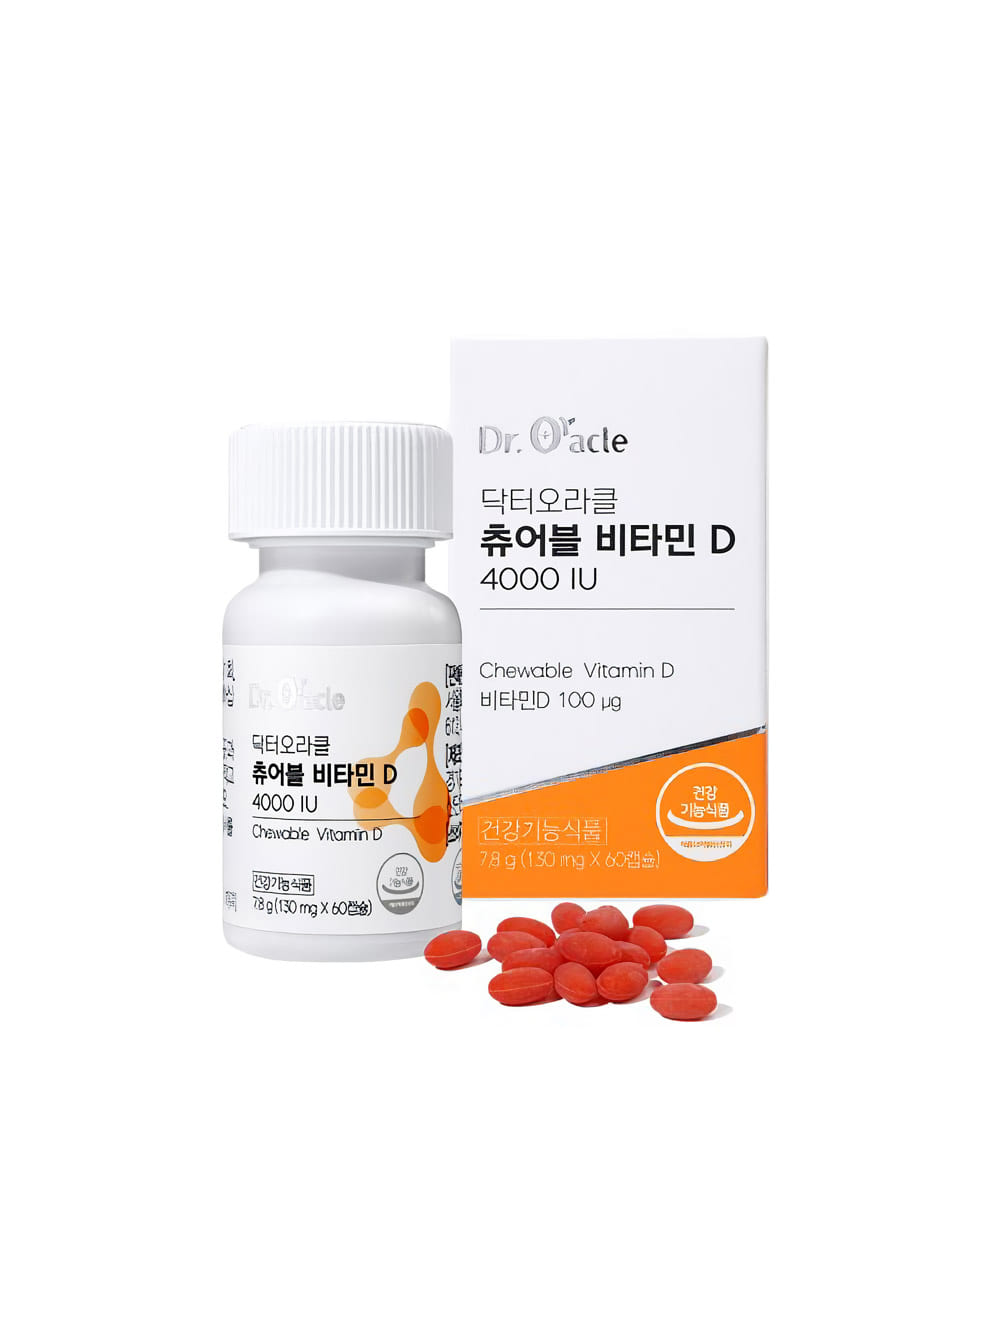 Dr. Oracle Chewable Vitamin D 4000 IU